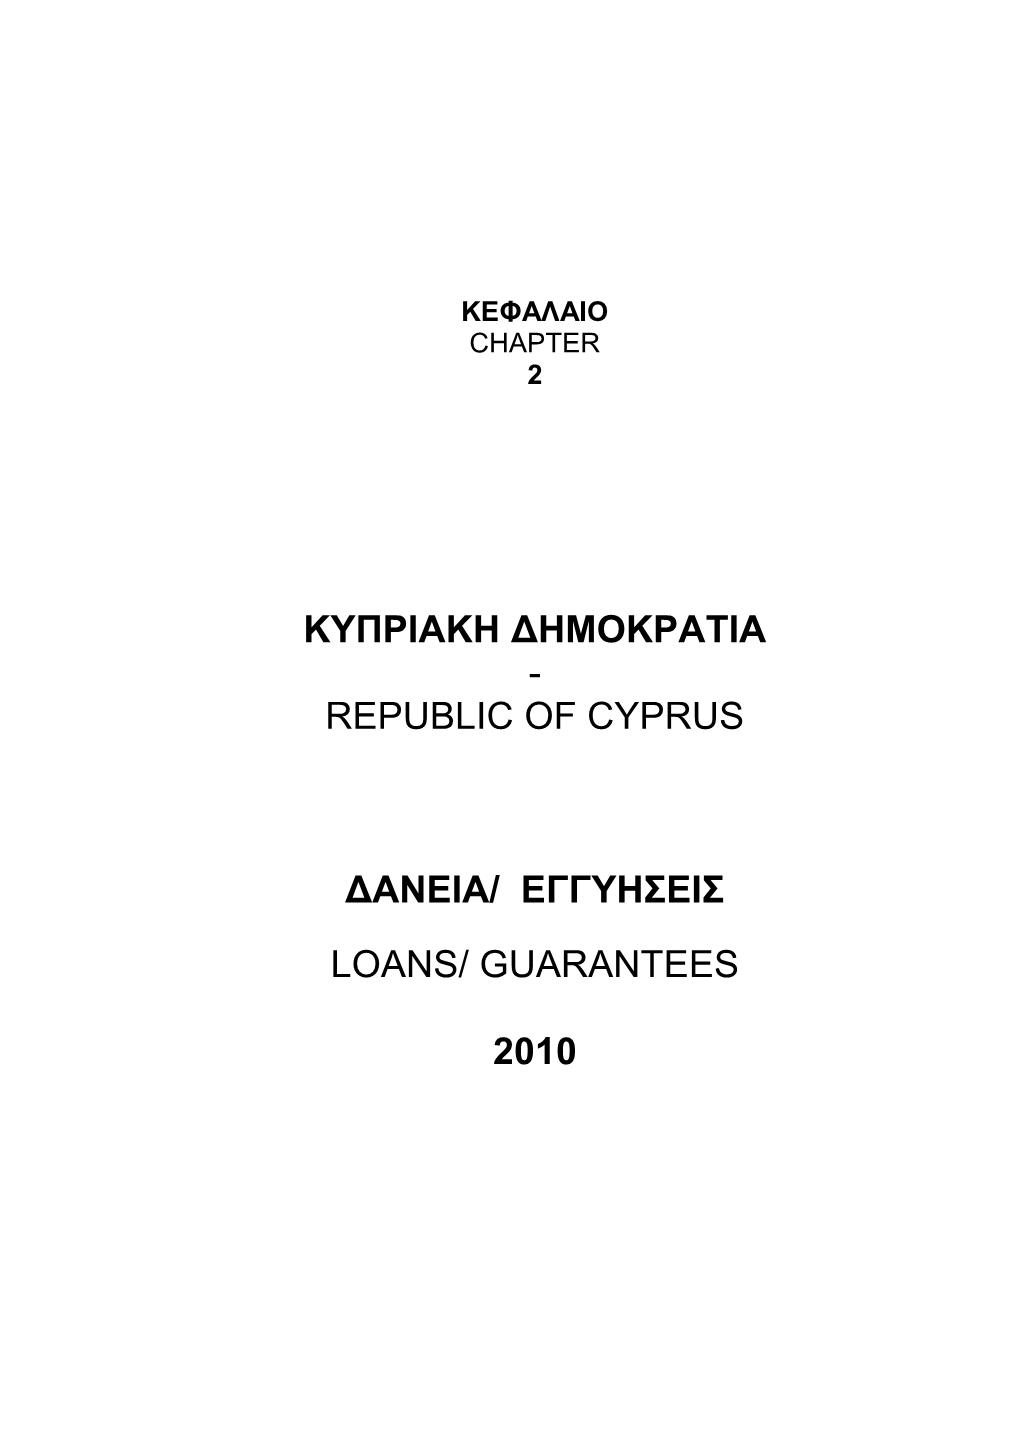 Kyπpiakh Δhmokpatia - Republic of Cyprus